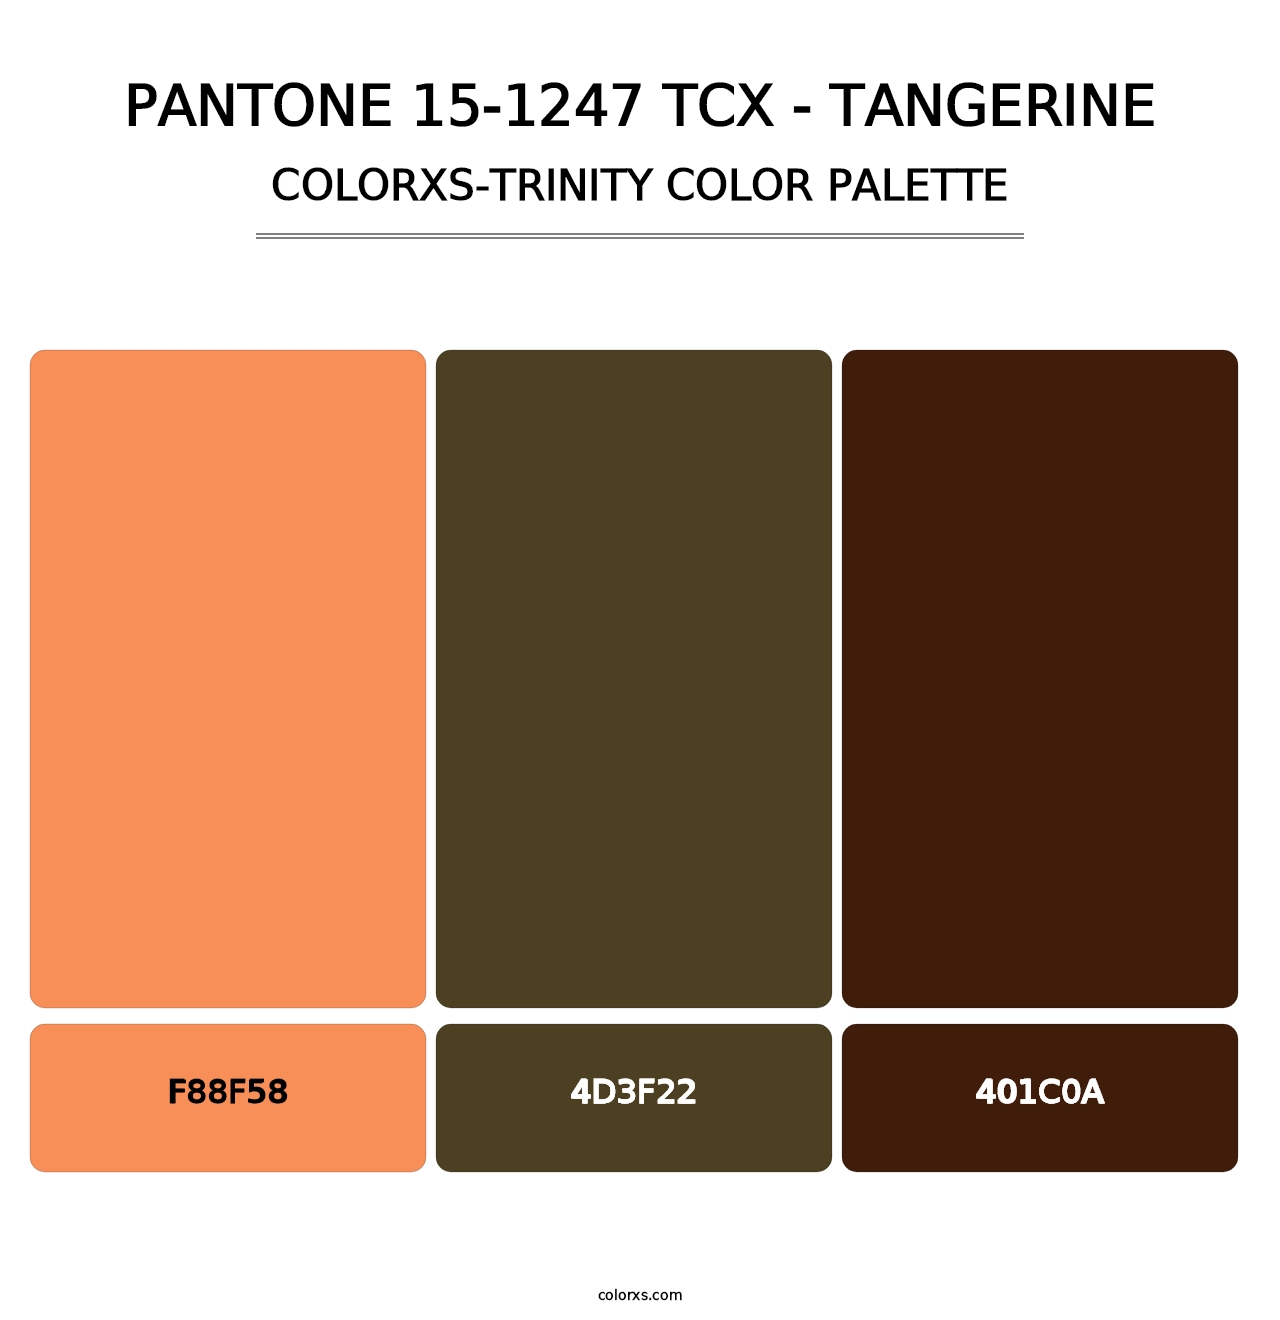 PANTONE 15-1247 TCX - Tangerine - Colorxs Trinity Palette